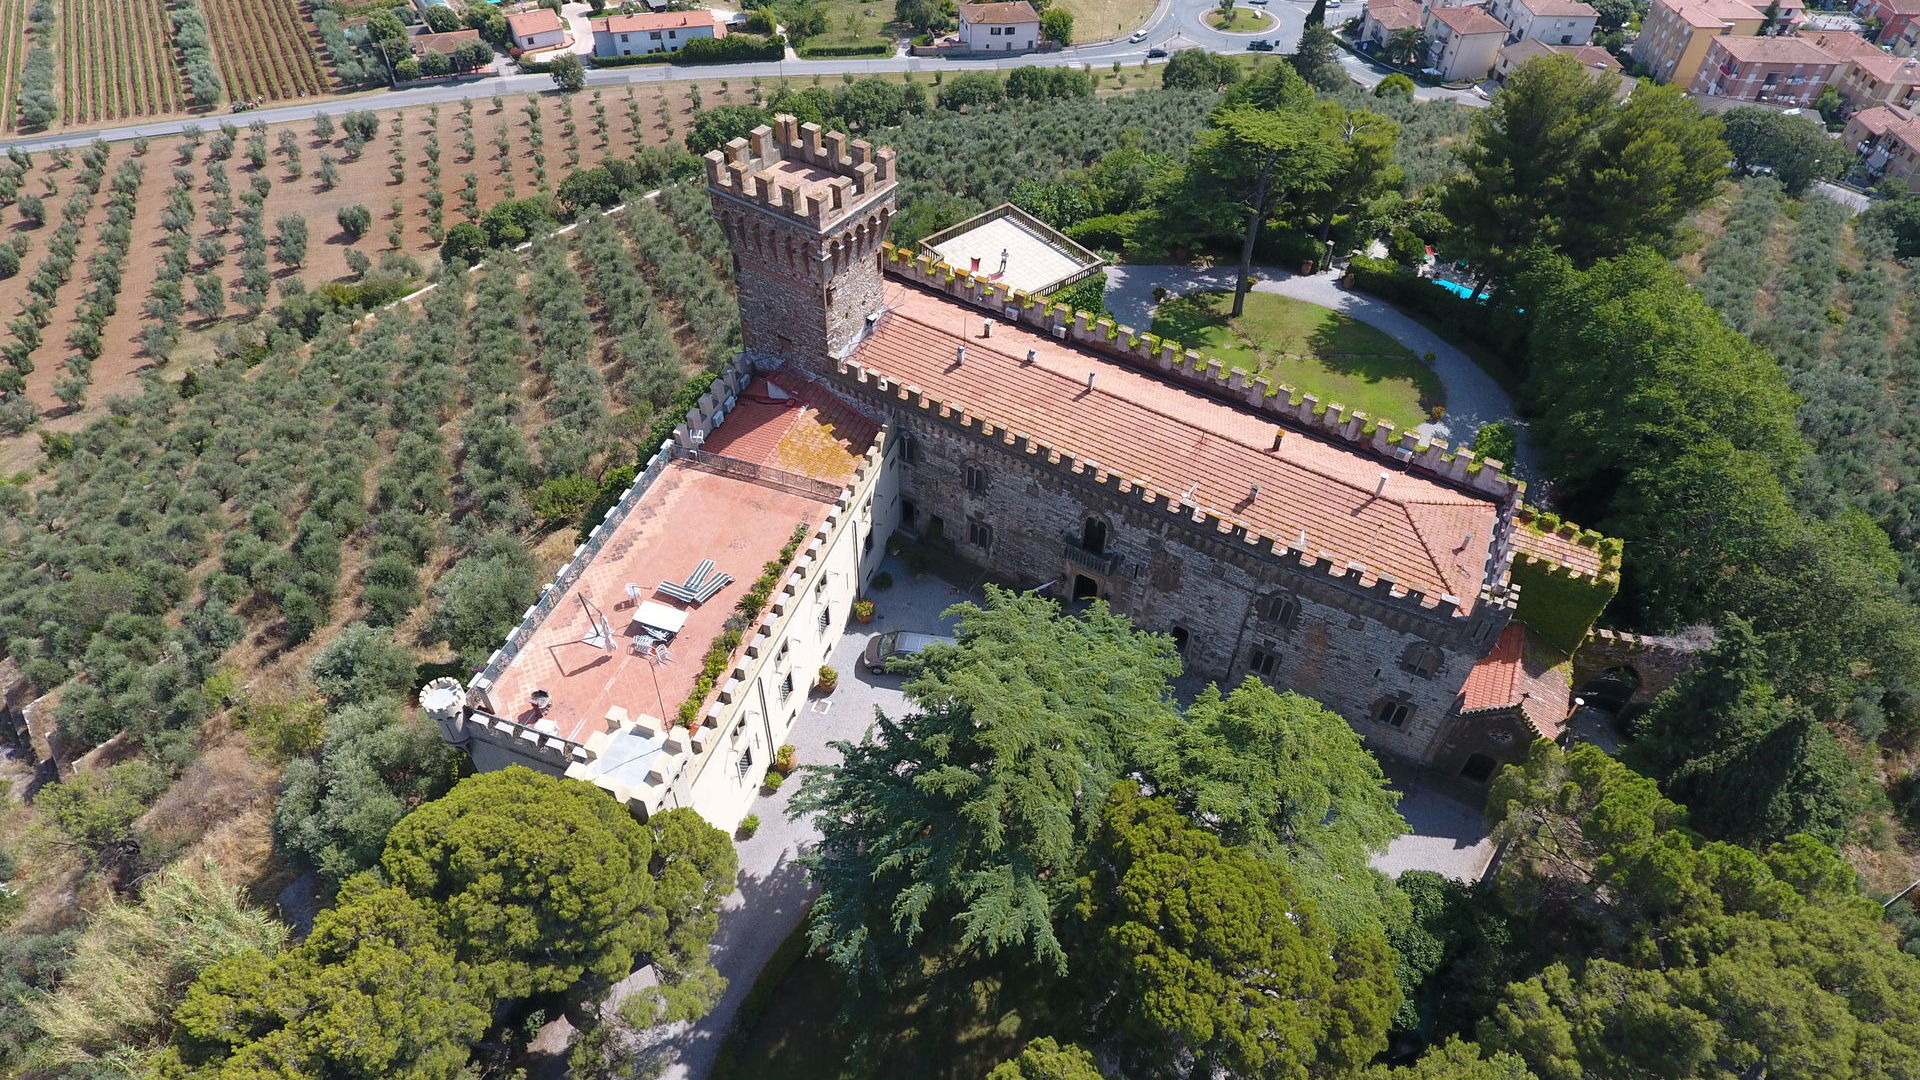 Castello Leopoldo